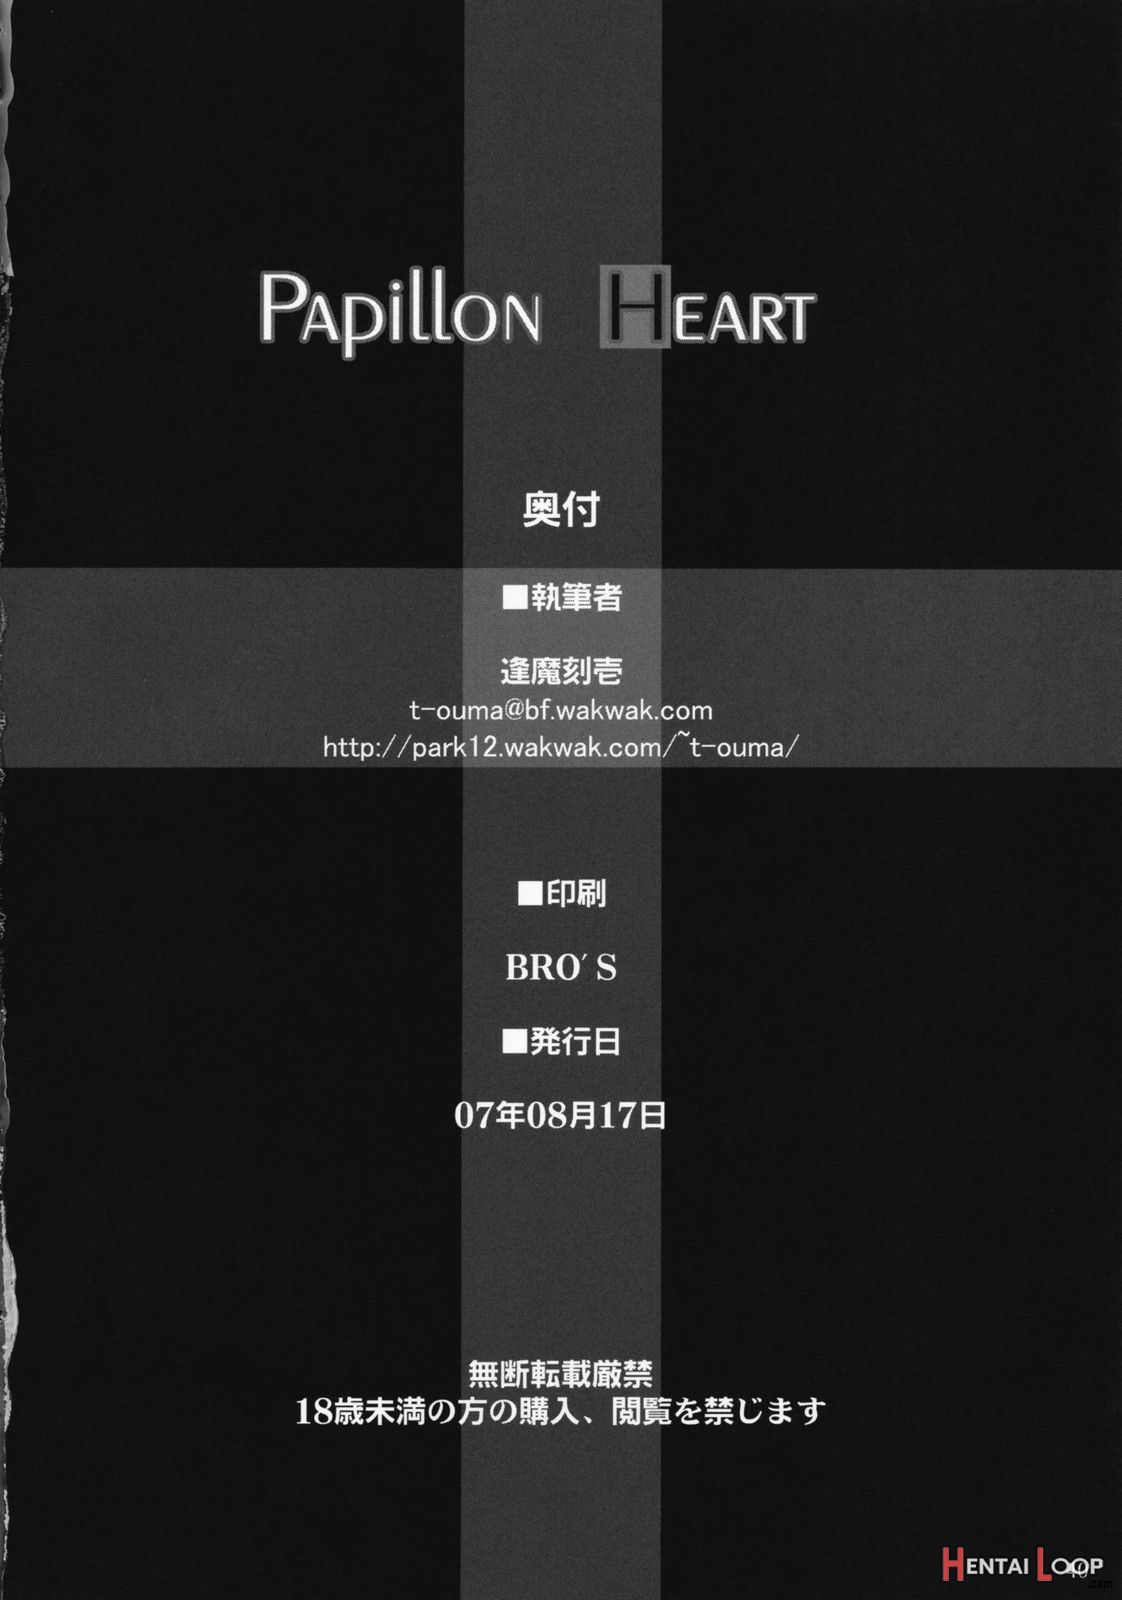 Papillon Heart page 39